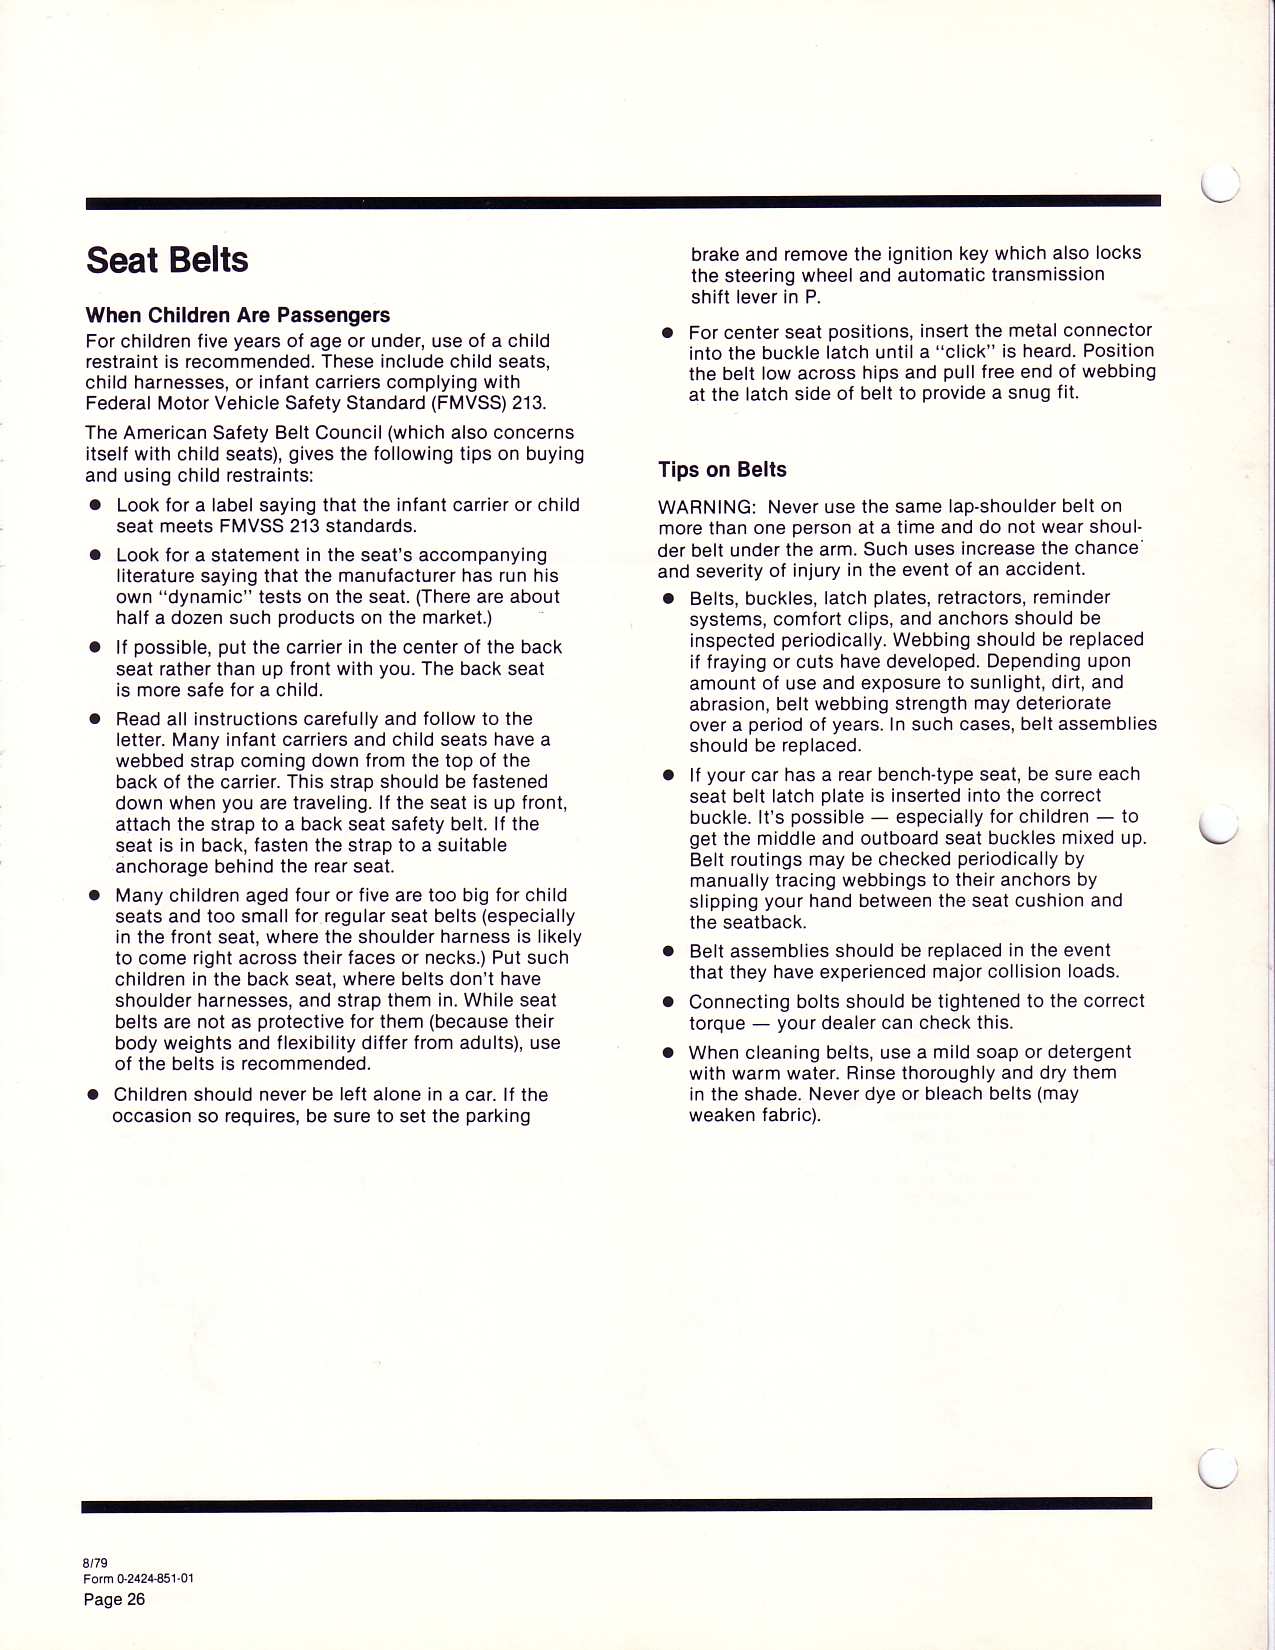 1980_AMC_Data_Book-B26